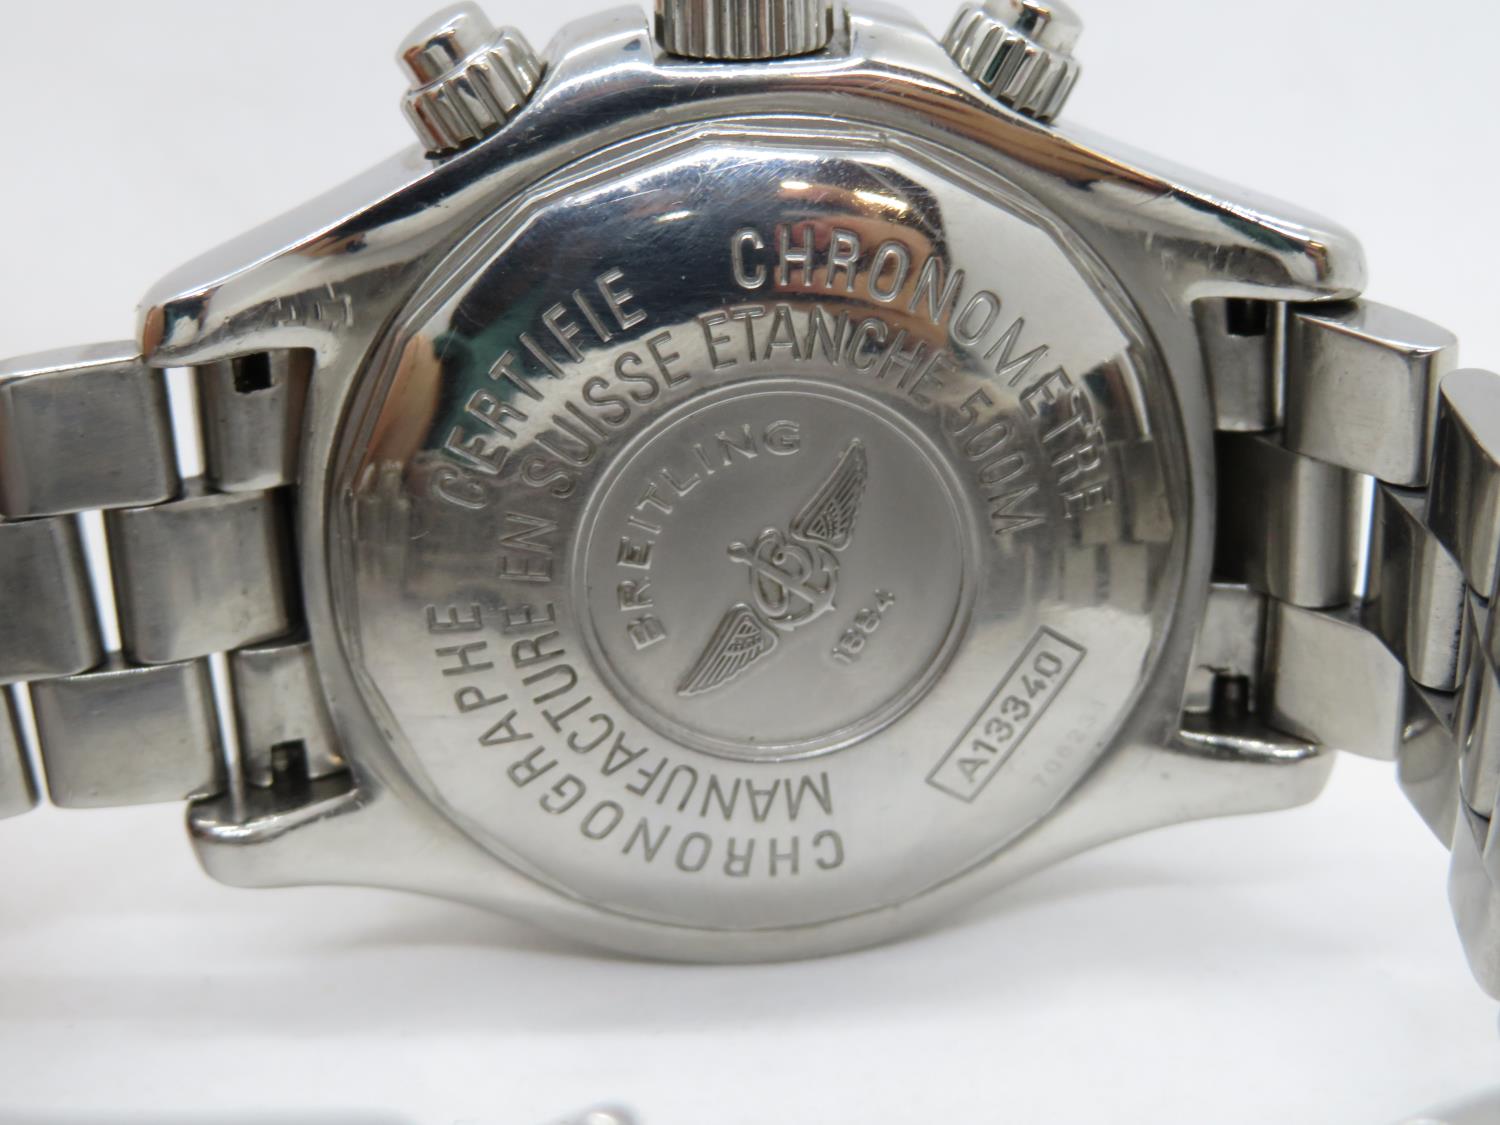 Breitling Super Ocean chronometer - fully working - Image 3 of 4